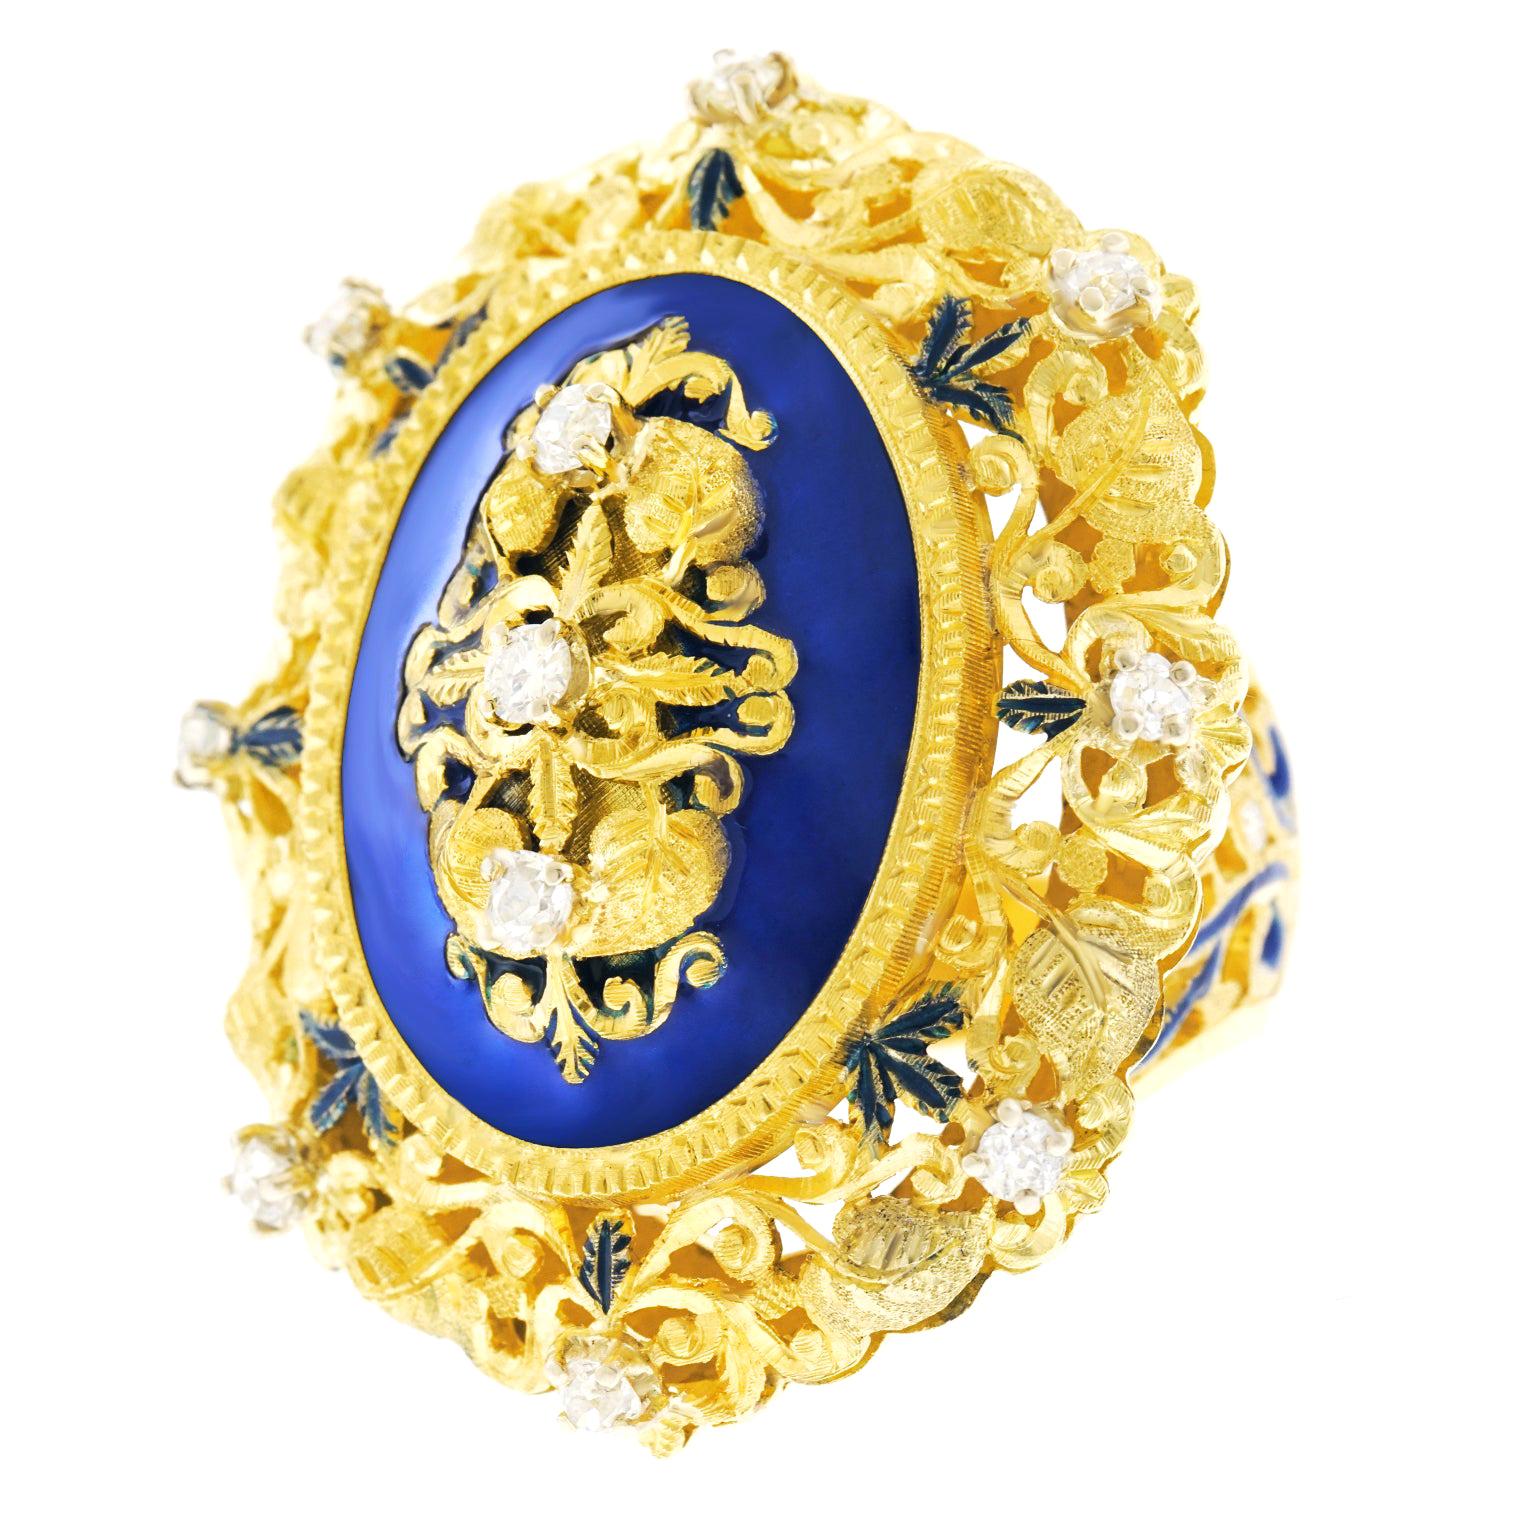 Huge Enamel and Diamond-Set Baronial Chic Ring